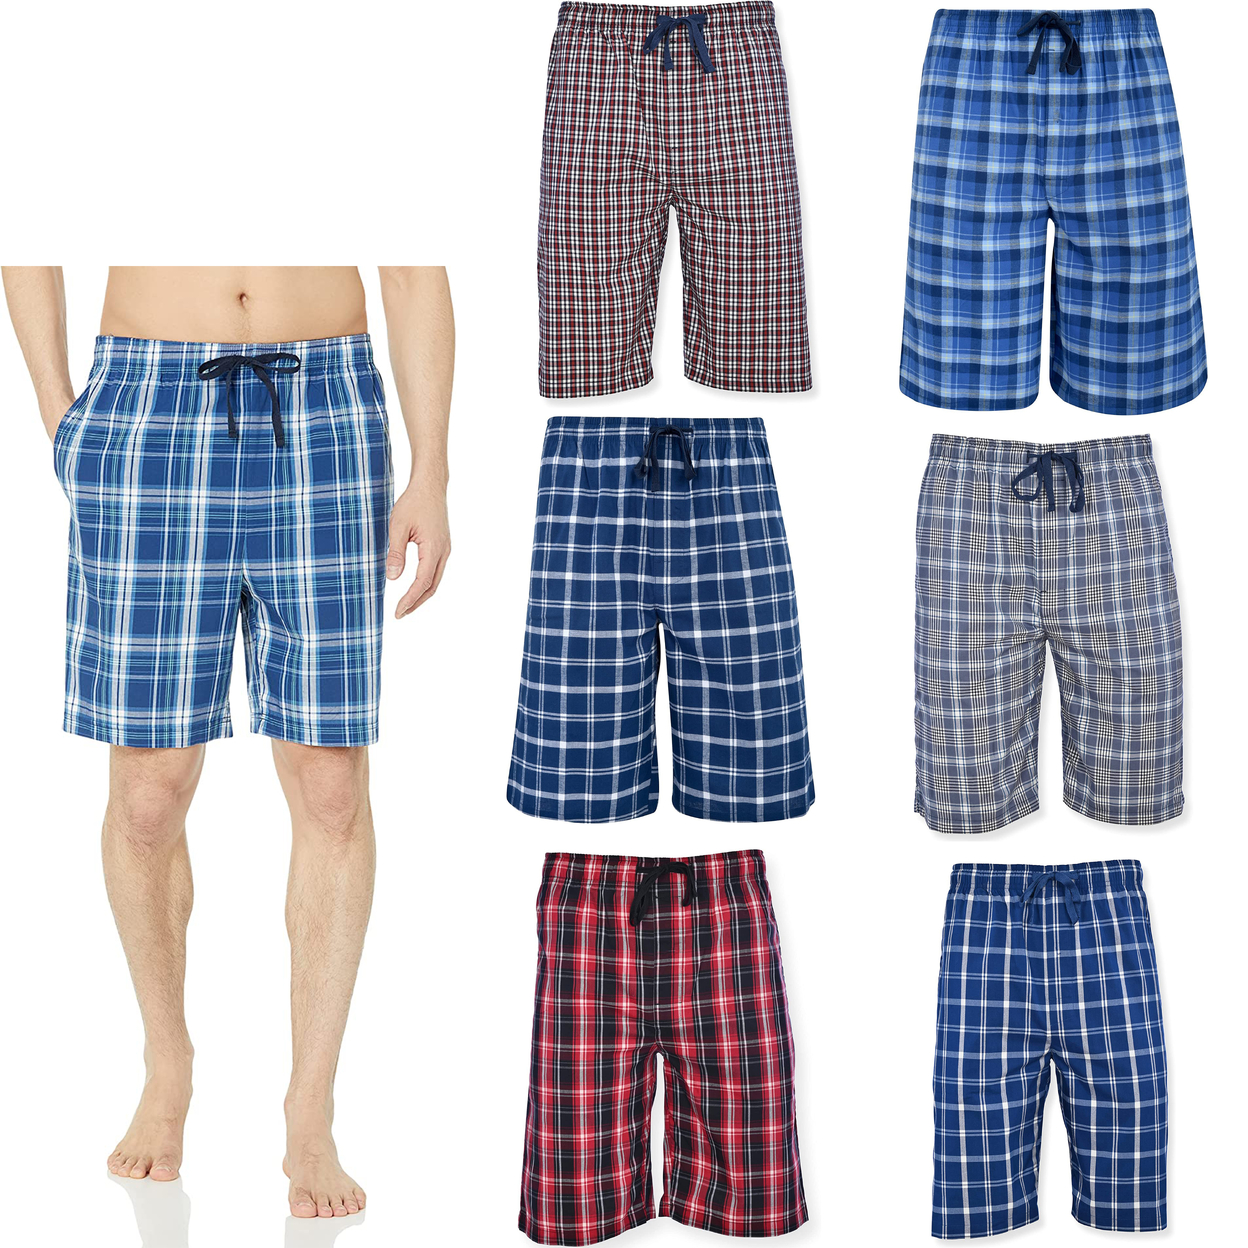 2-Pack: Men's Ultra Soft Plaid Lounge Pajama Sleep Wear Shorts - Grey & Grey, Small